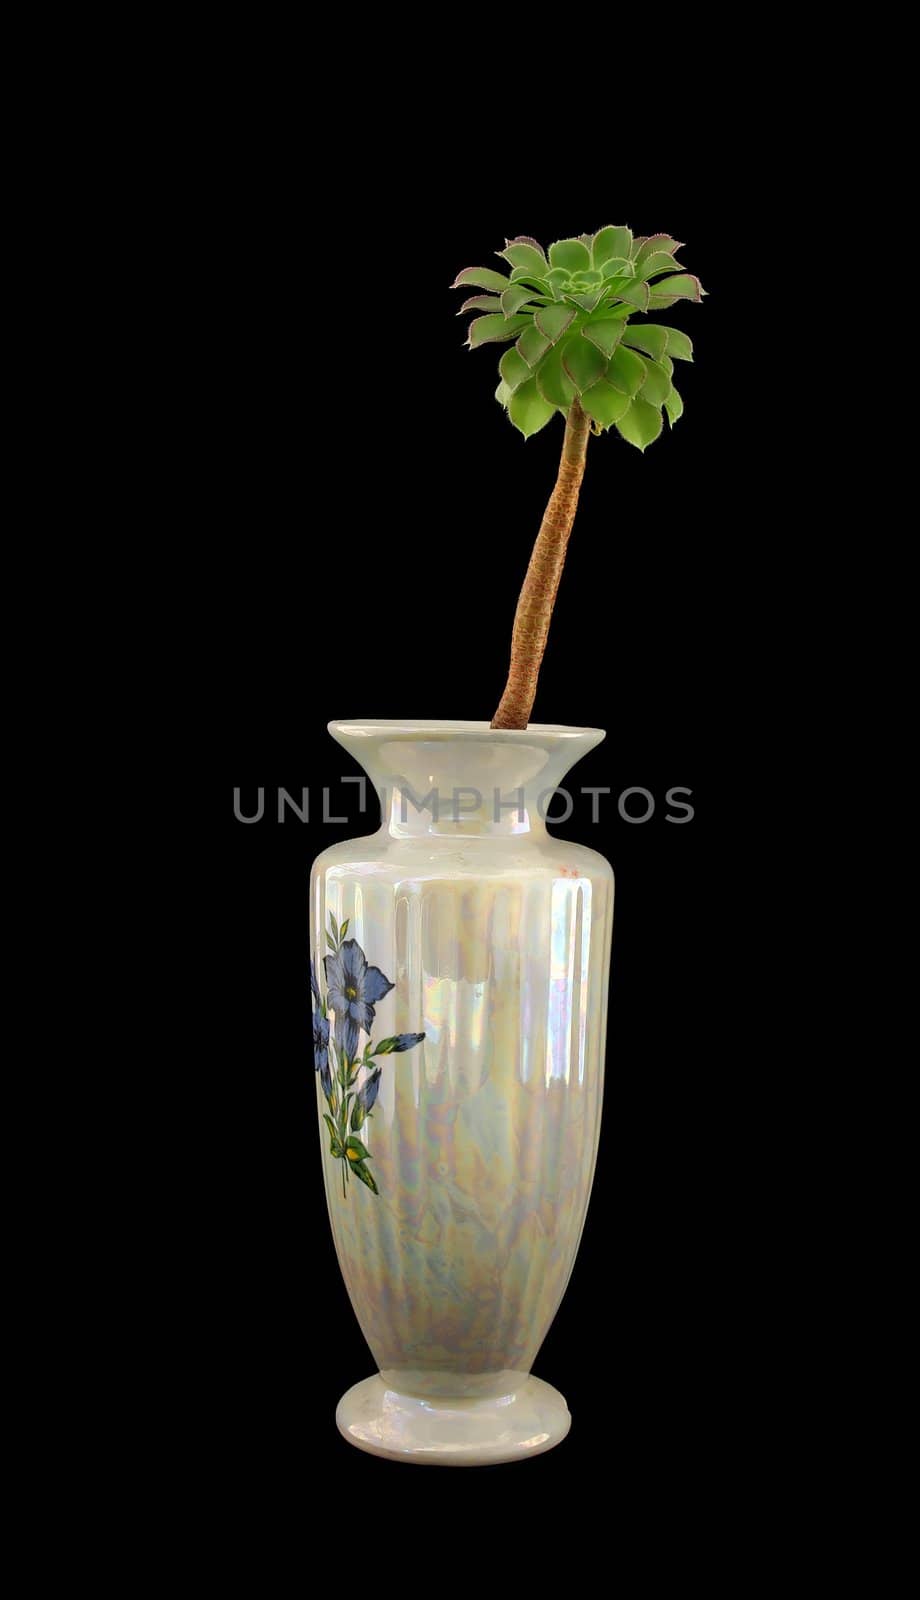 Porcelain vase with exotic plant on black background